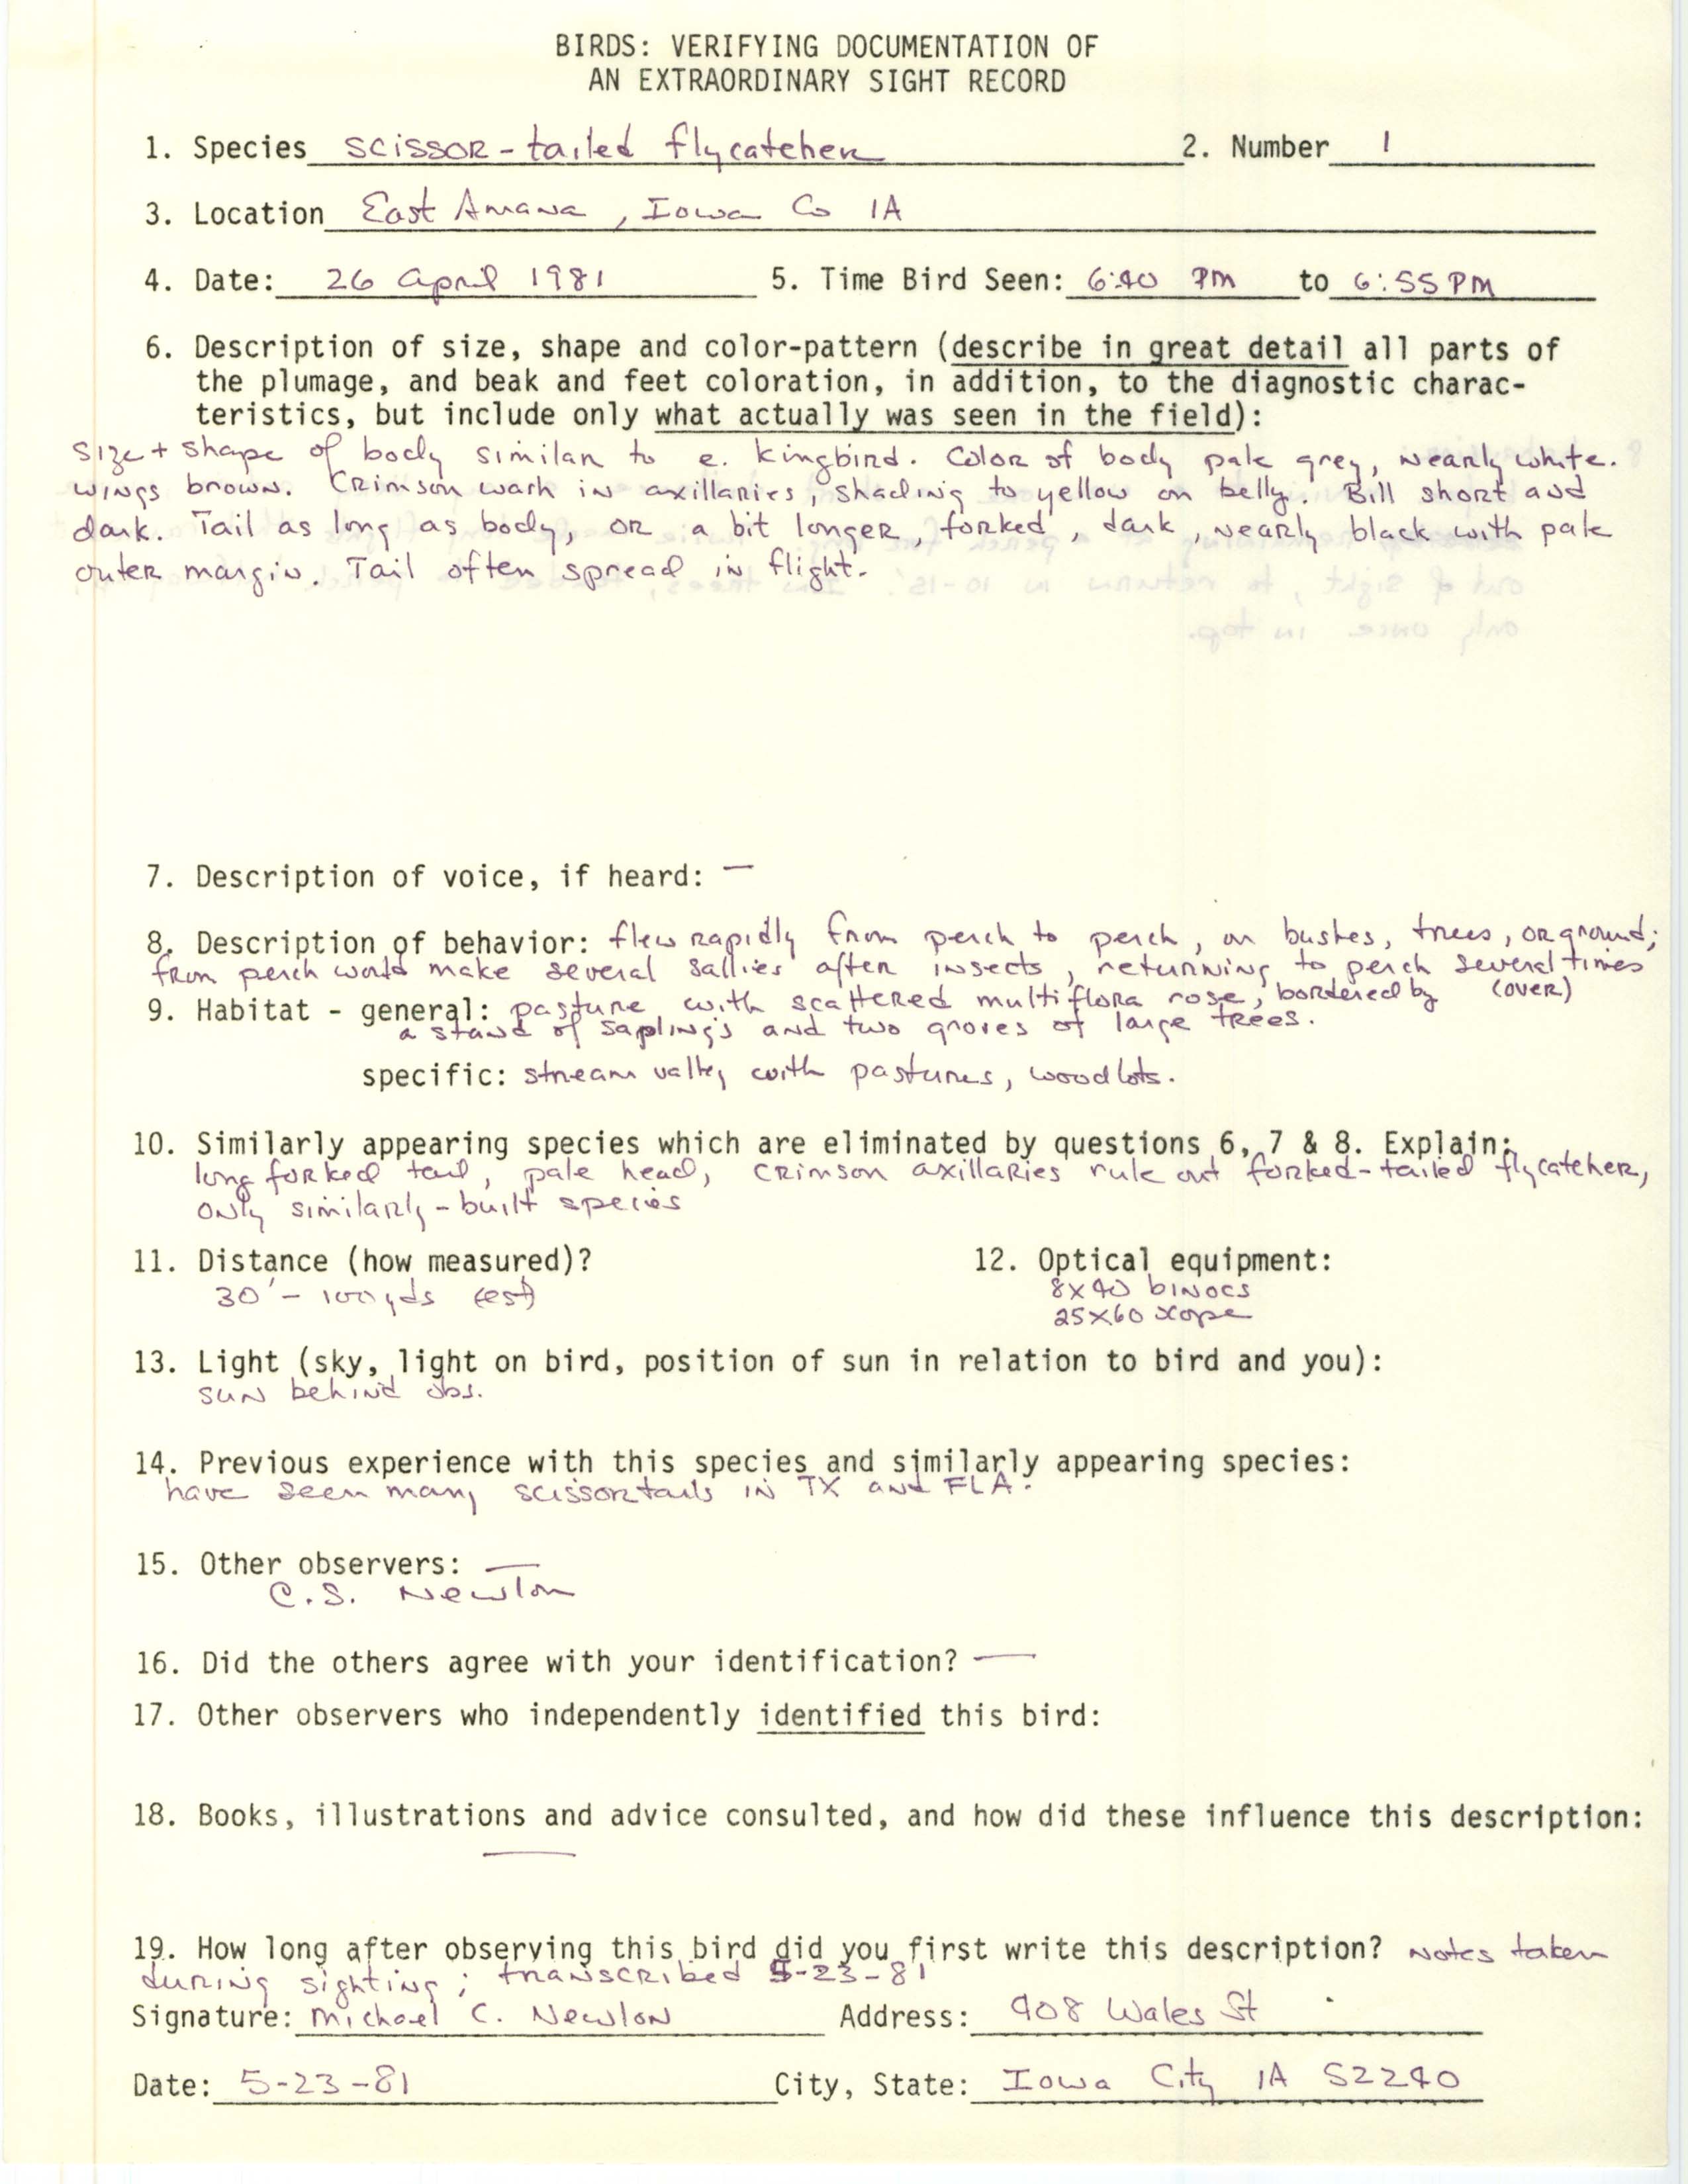 Rare bird documentation form for Scissor-tailed Flycatcher at East Amana, 1981